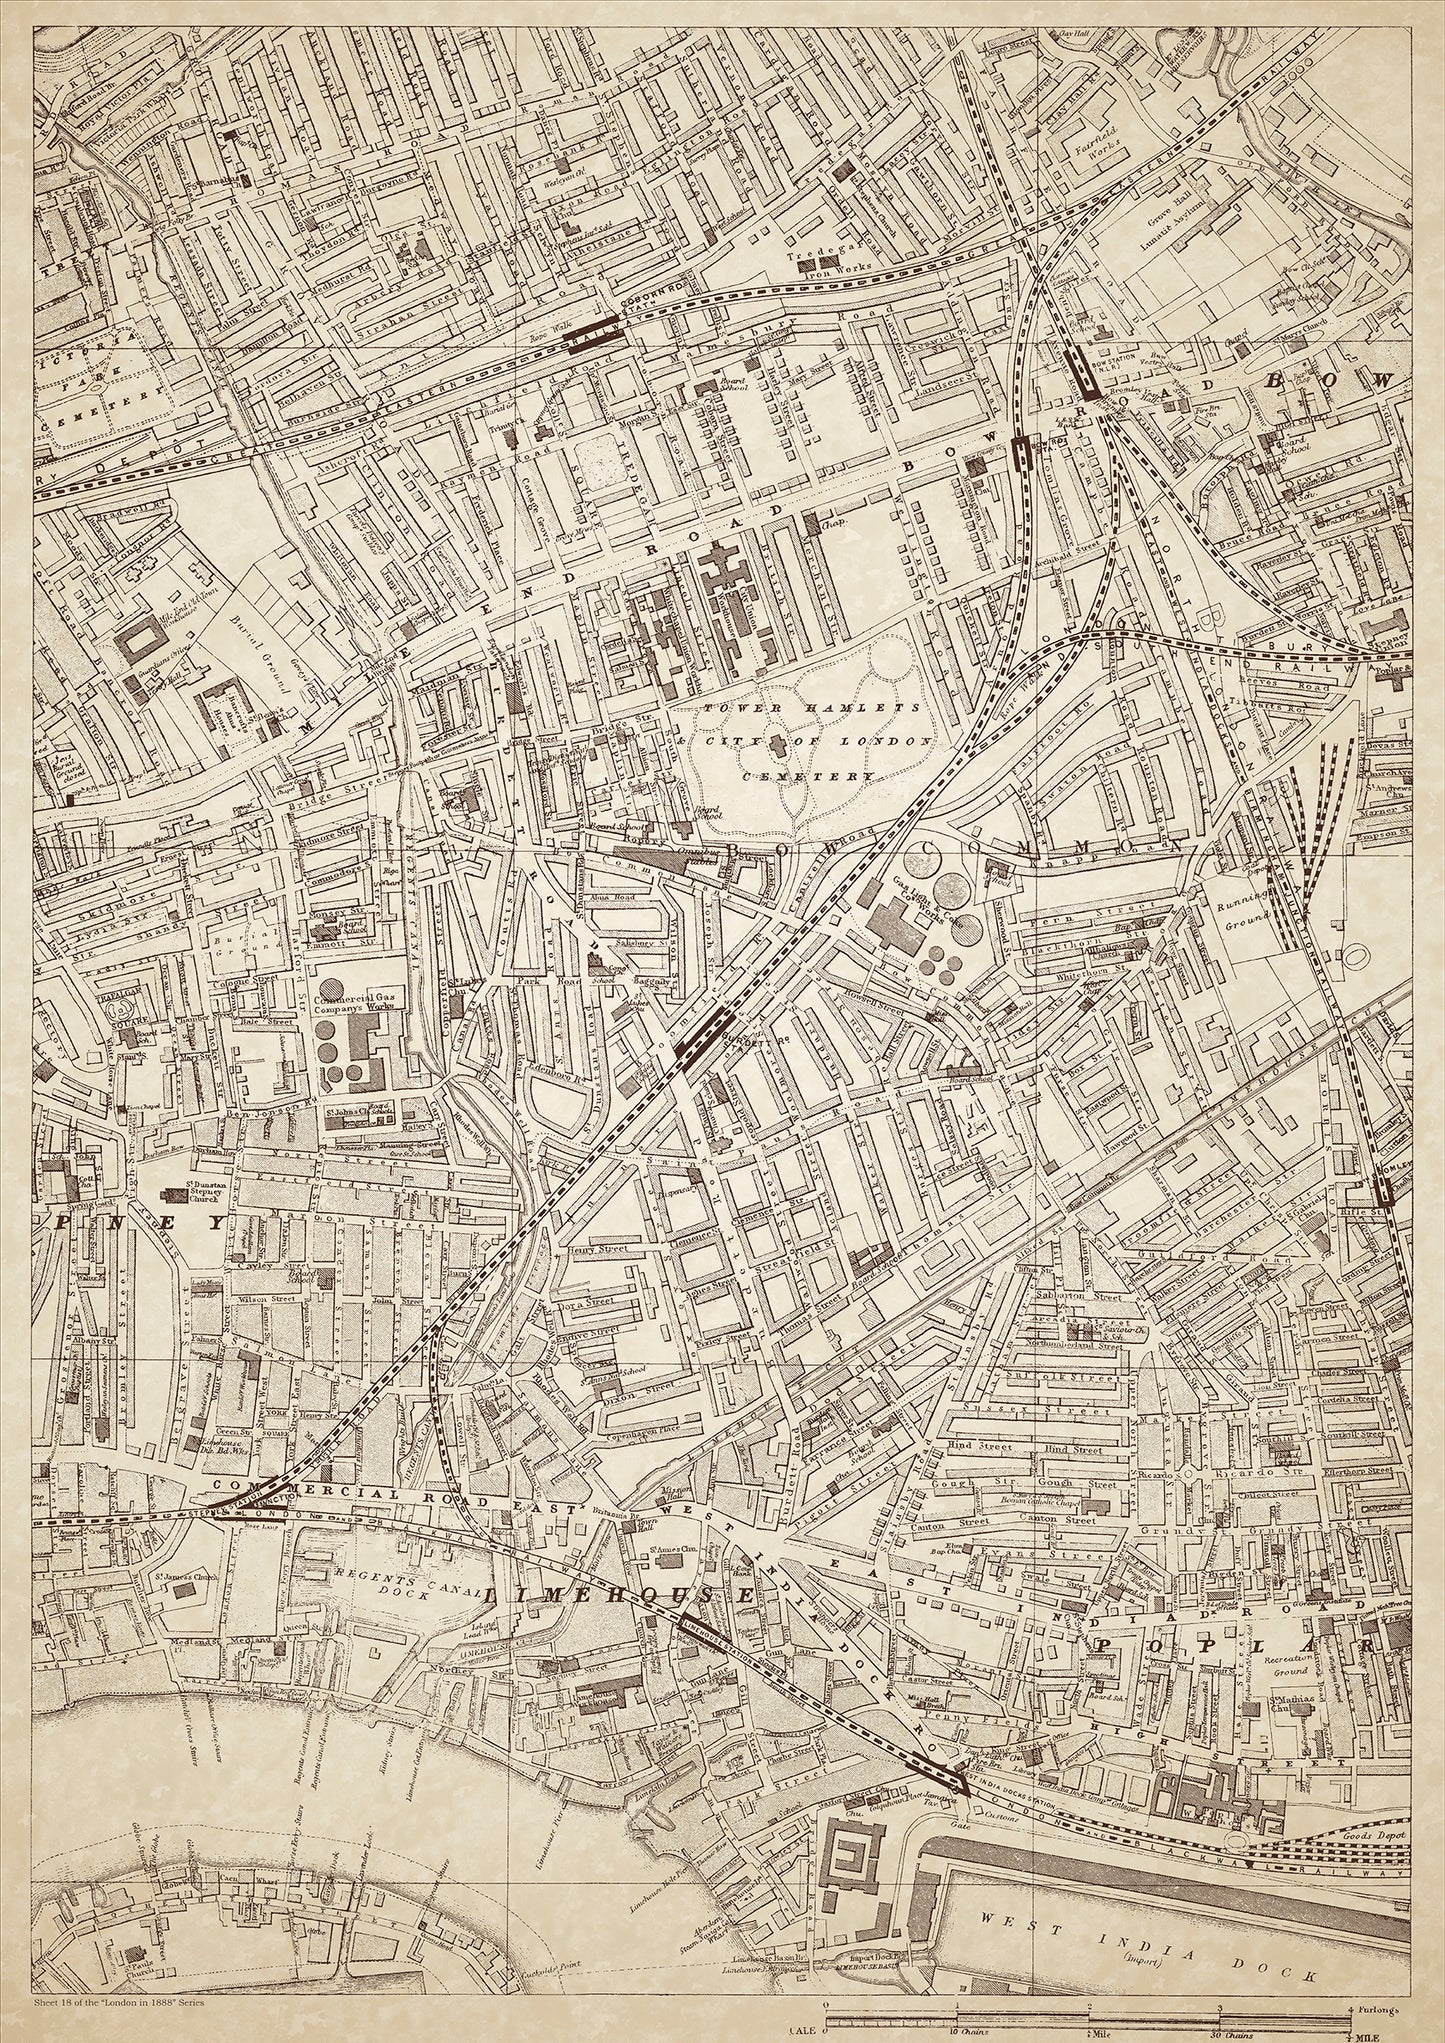 London in 1888 Series - showing Mile End Road, Limehouse, Poplar, Stepney (east) - sheet 18